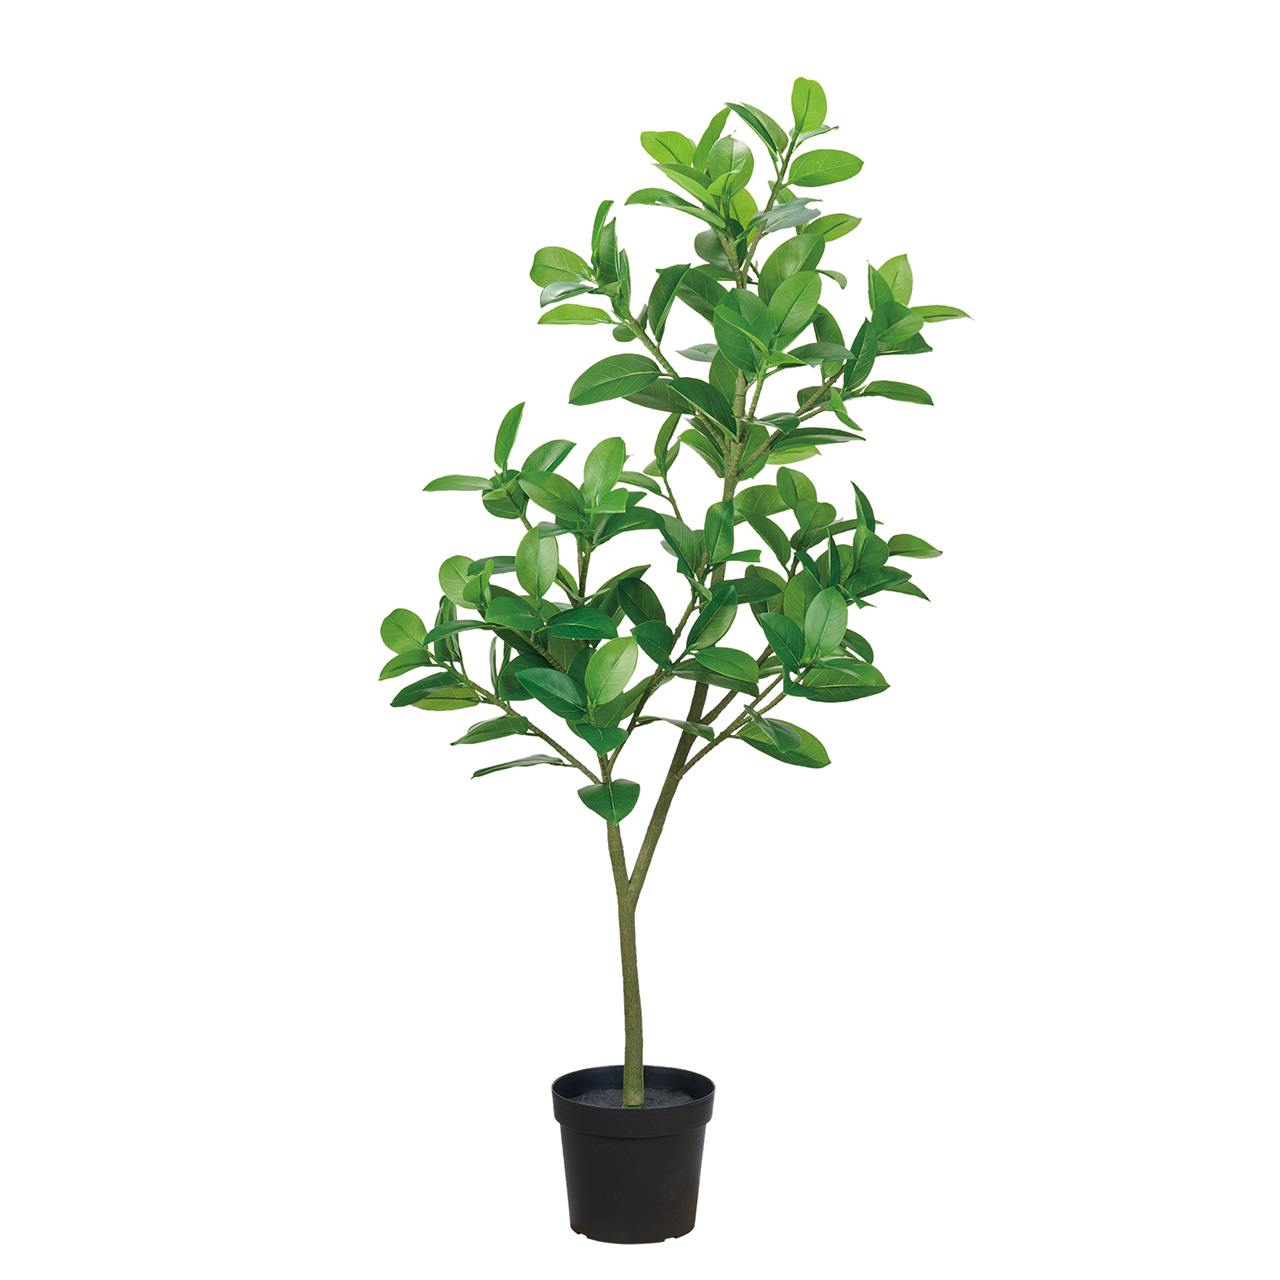 MAGIQ　ゴムノキポット3WAY　1鉢　観葉植物　組み立て式・3スタイルチェンジ　インテリアグリーン　フェイクグリーン　FG000778